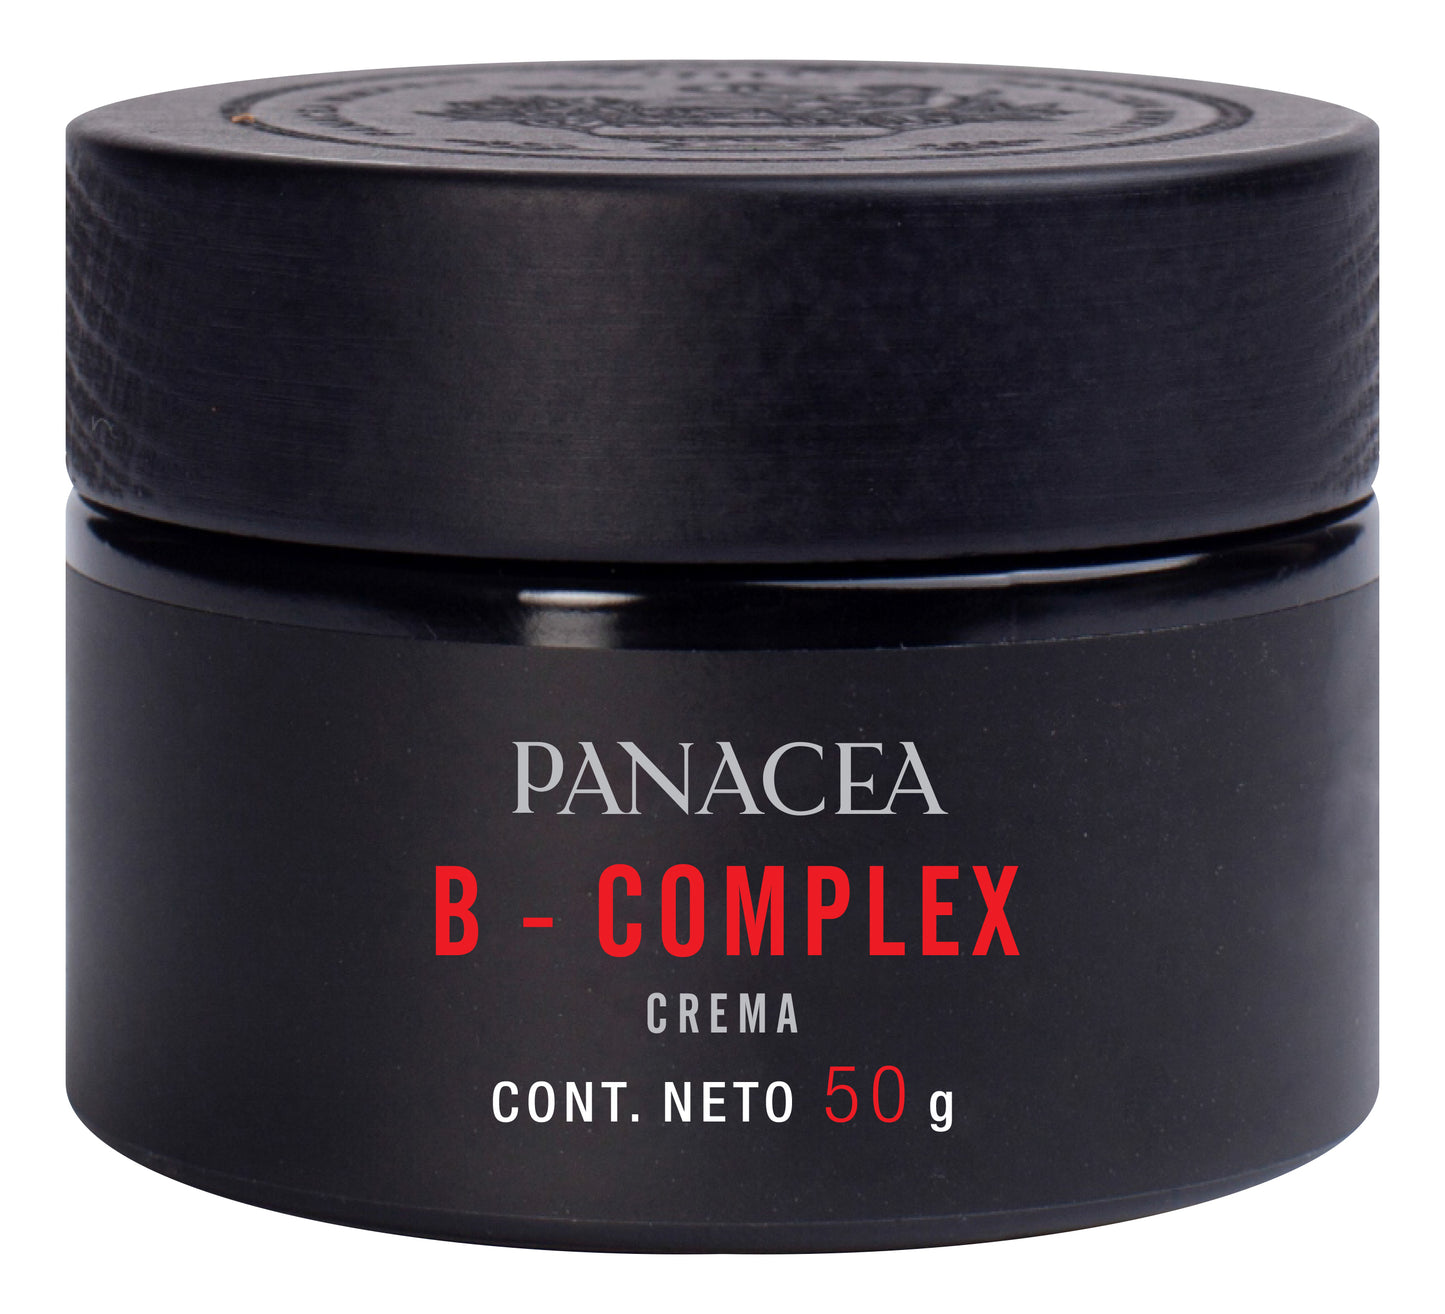 Crema B-COMPLEX